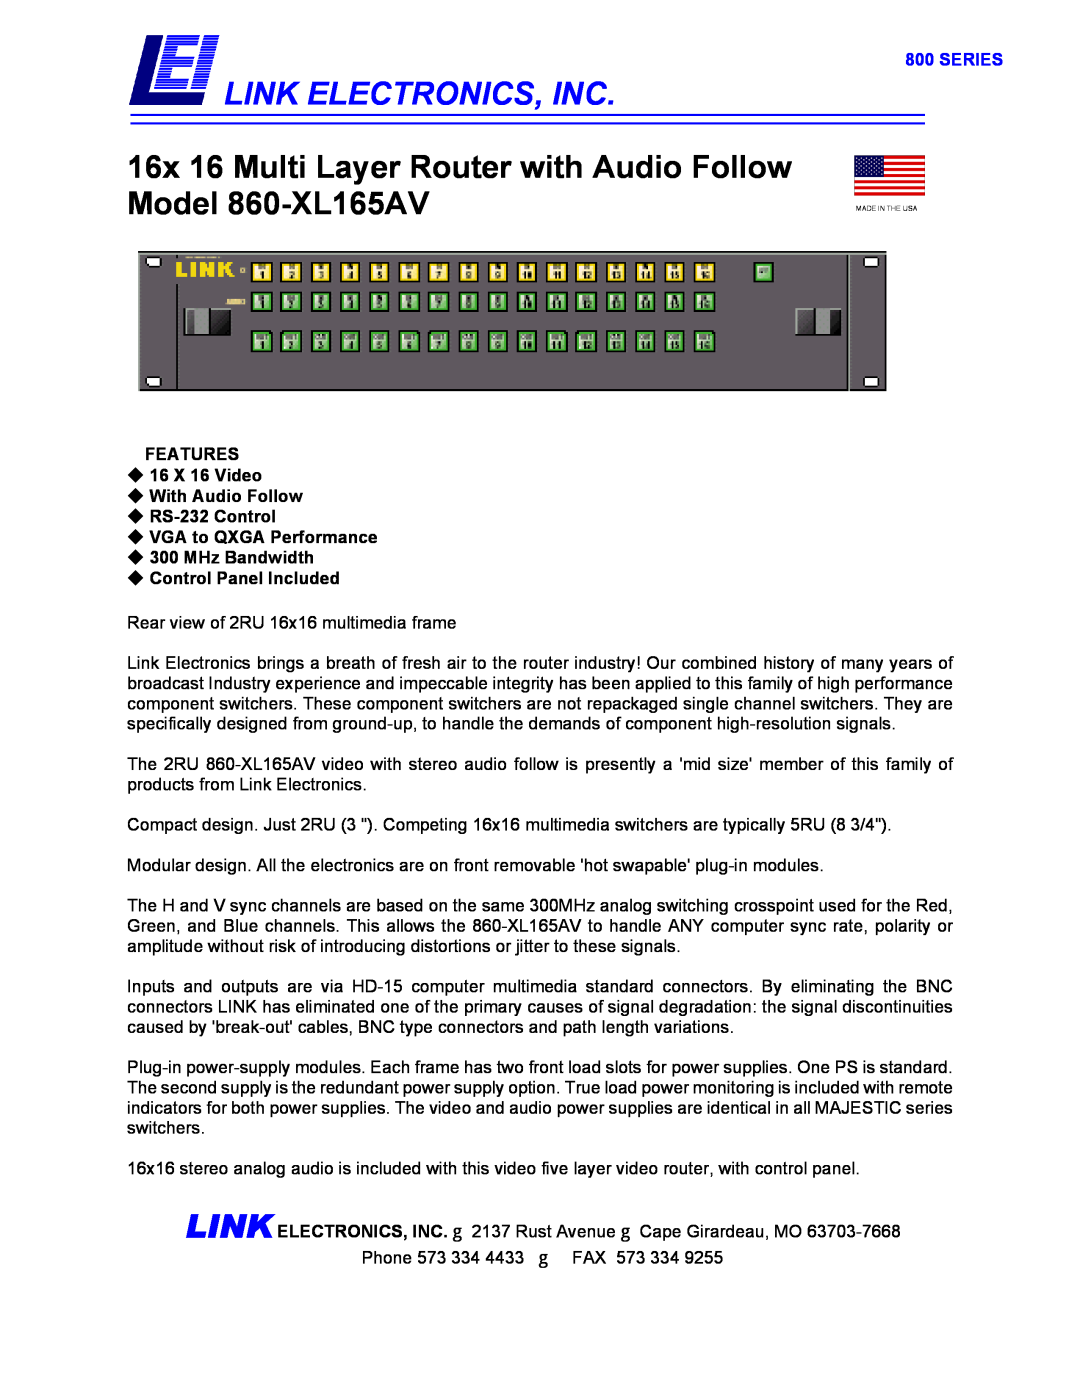 Link electronic 860-XL165AV manual Series, Link Electronics, Inc, ‹ VGA to QXGA Performance ‹ 300 MHz Bandwidth 